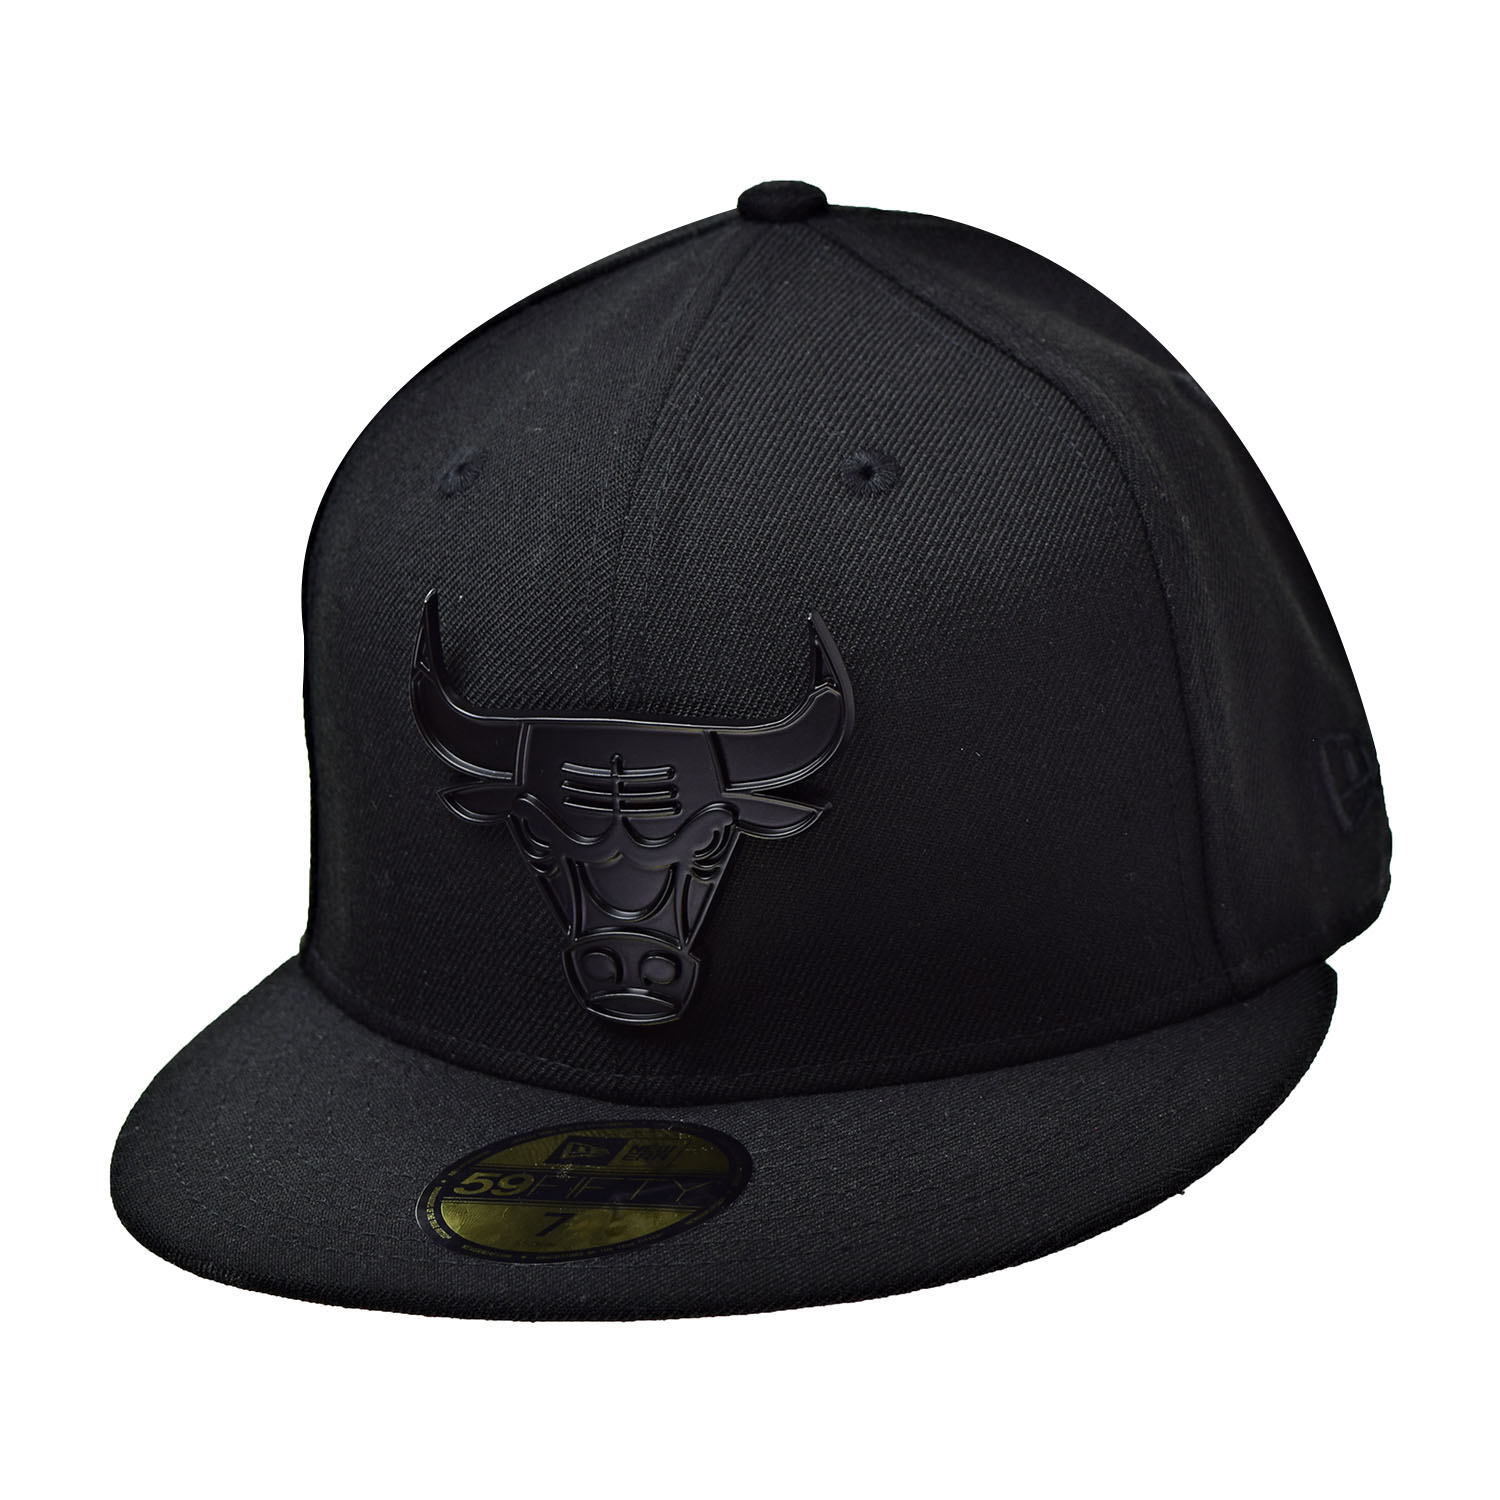 New Era Chicago Bulls 59fifty Metal Logo Men's Fitted Hat Cap Black eBay